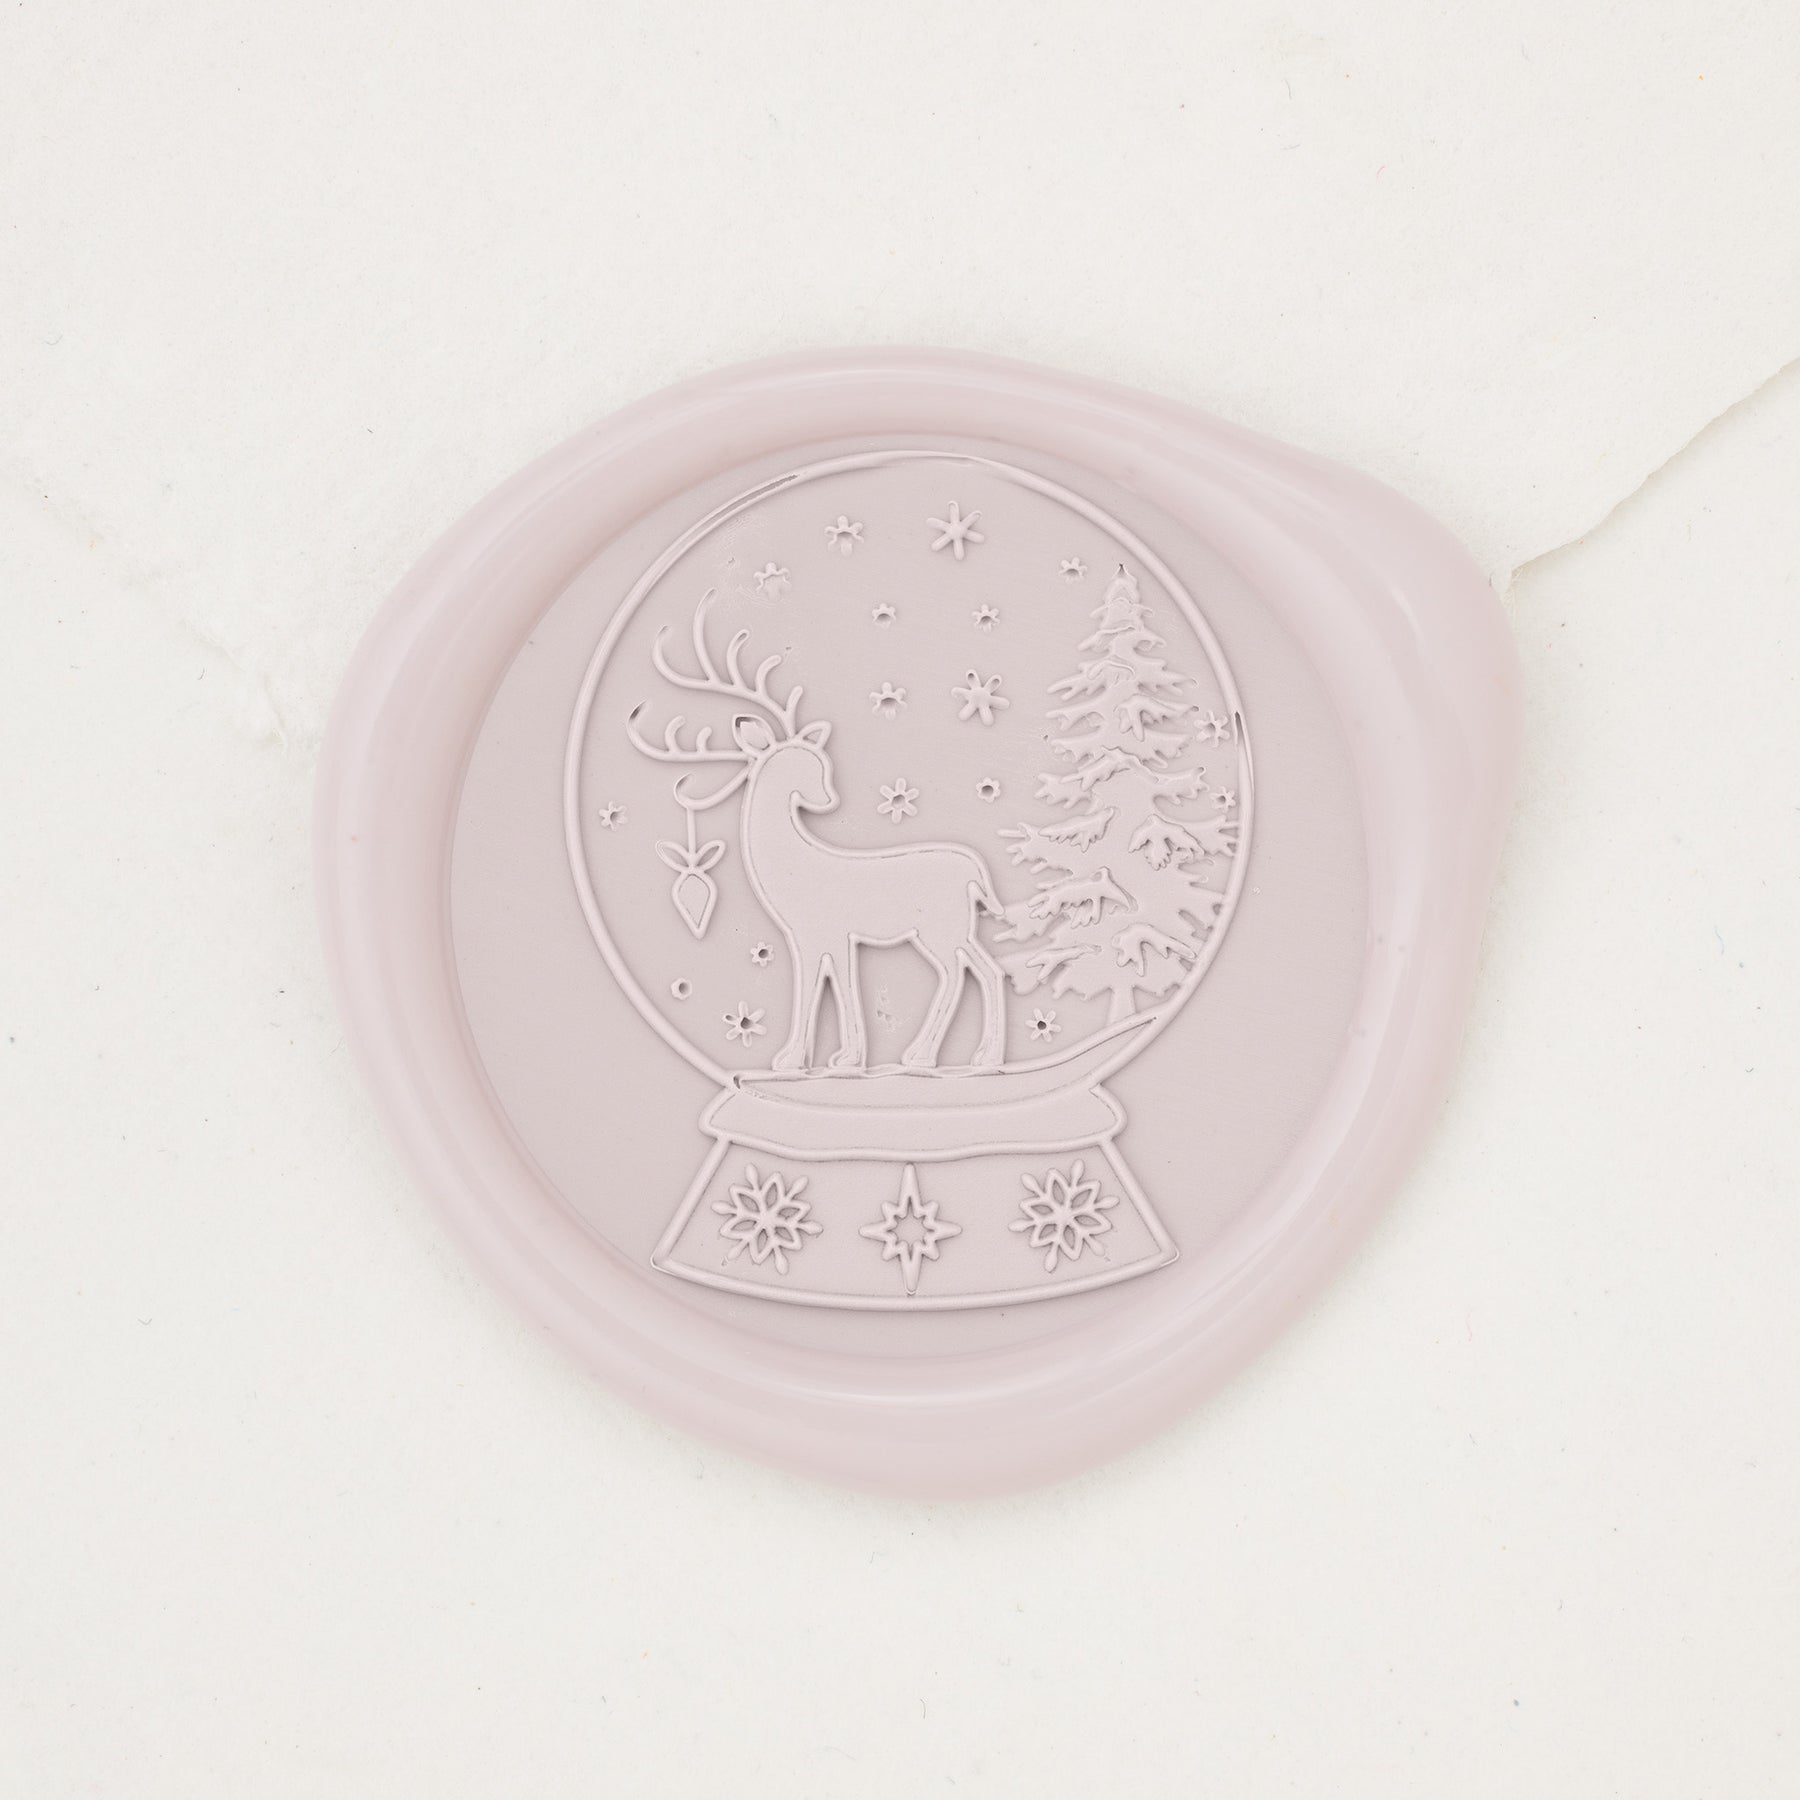 (601) Emerald Sparkle Transparent Ceramic Style Sealing Wax Sticks